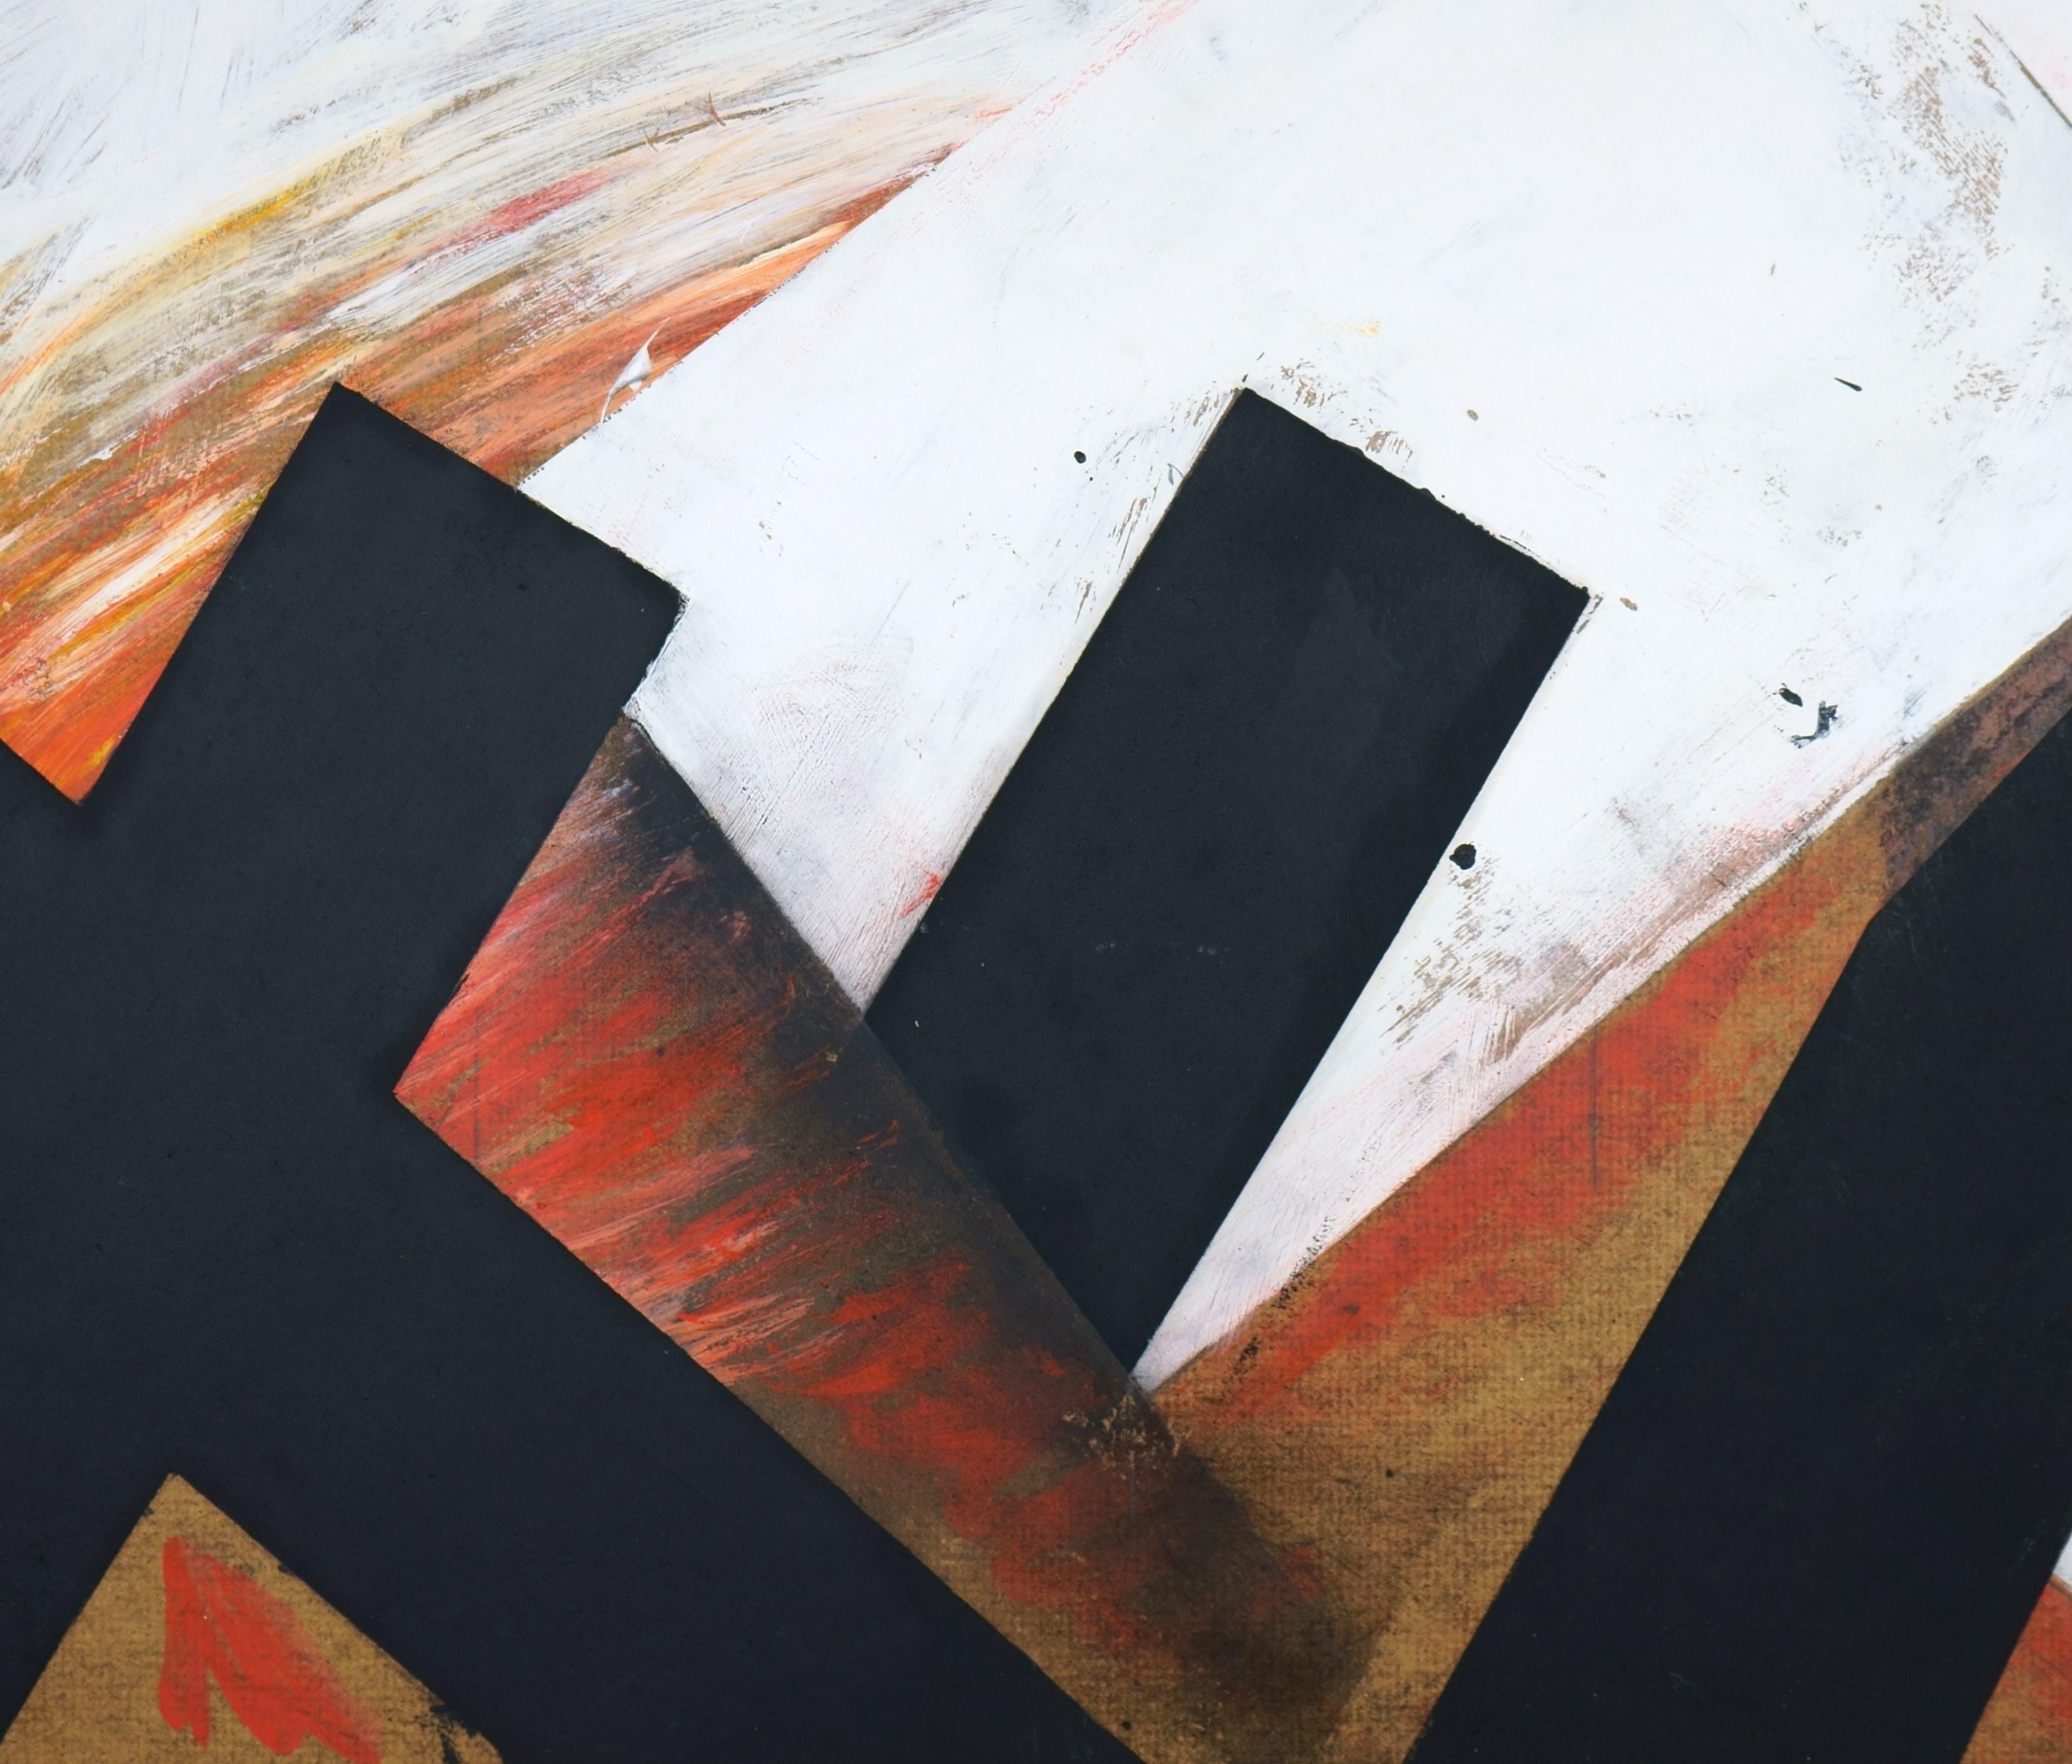 Jürgen Möbius (*1939 Großenhain), Black form surfaces on red painterly ground. Oil on hardboard, 50 x 60 cm, 51 x 61 cm (frame), signed 